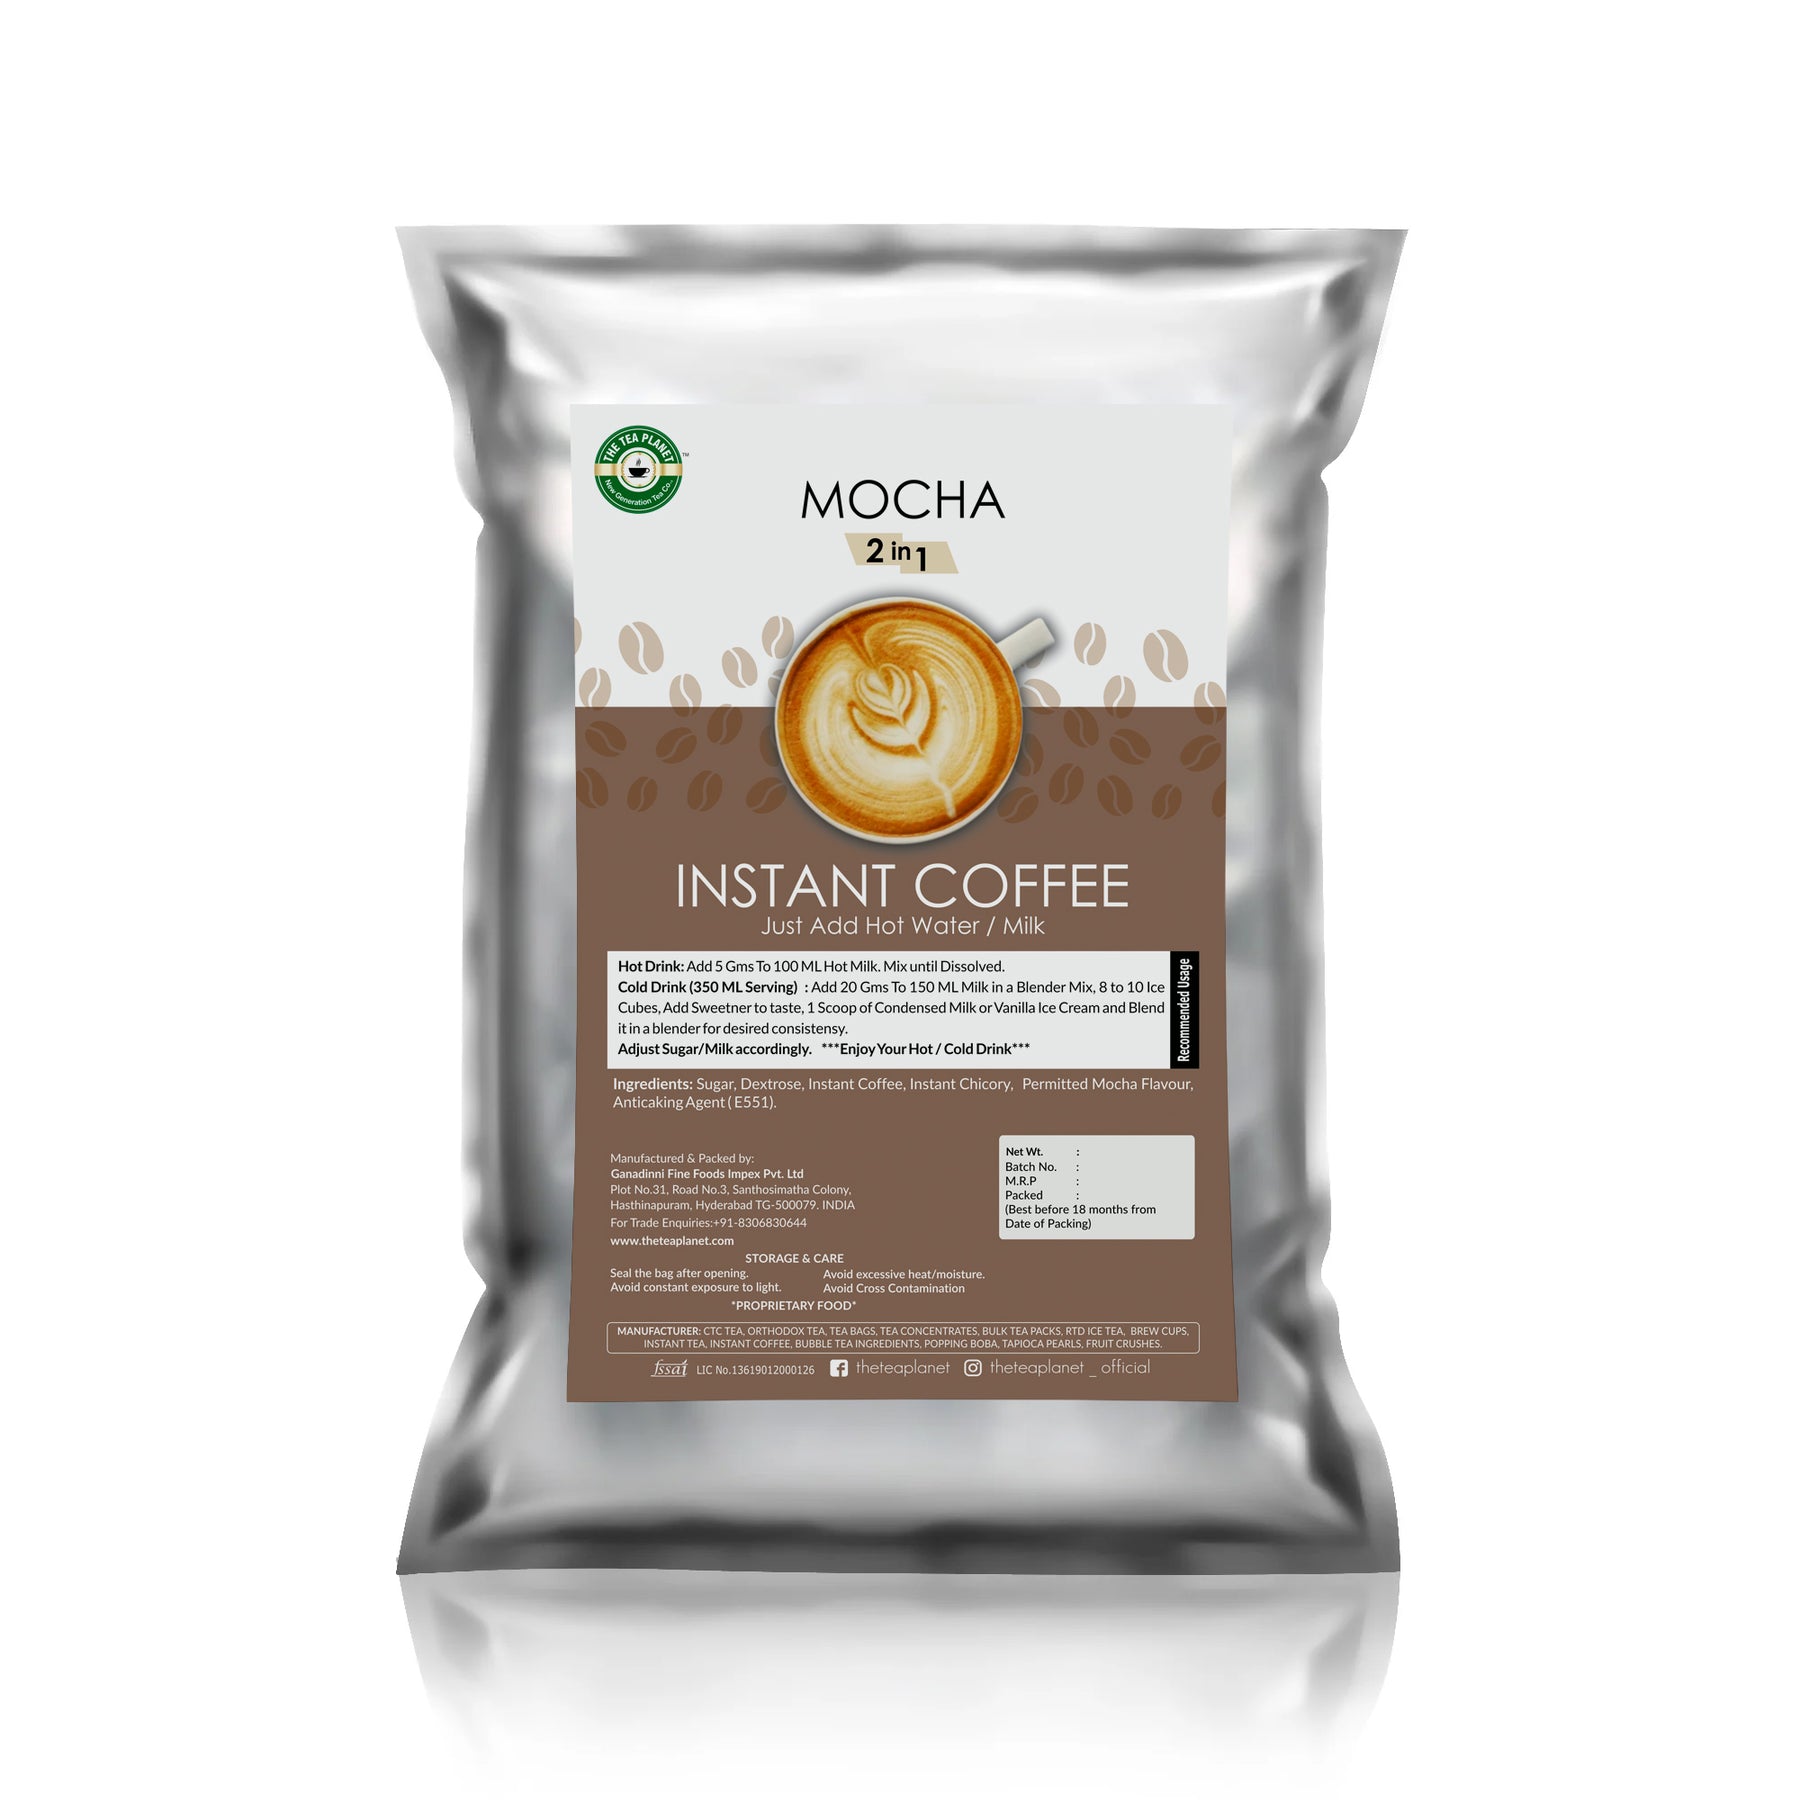 Mocha Instant Coffee Premix (2in 1) -1kg